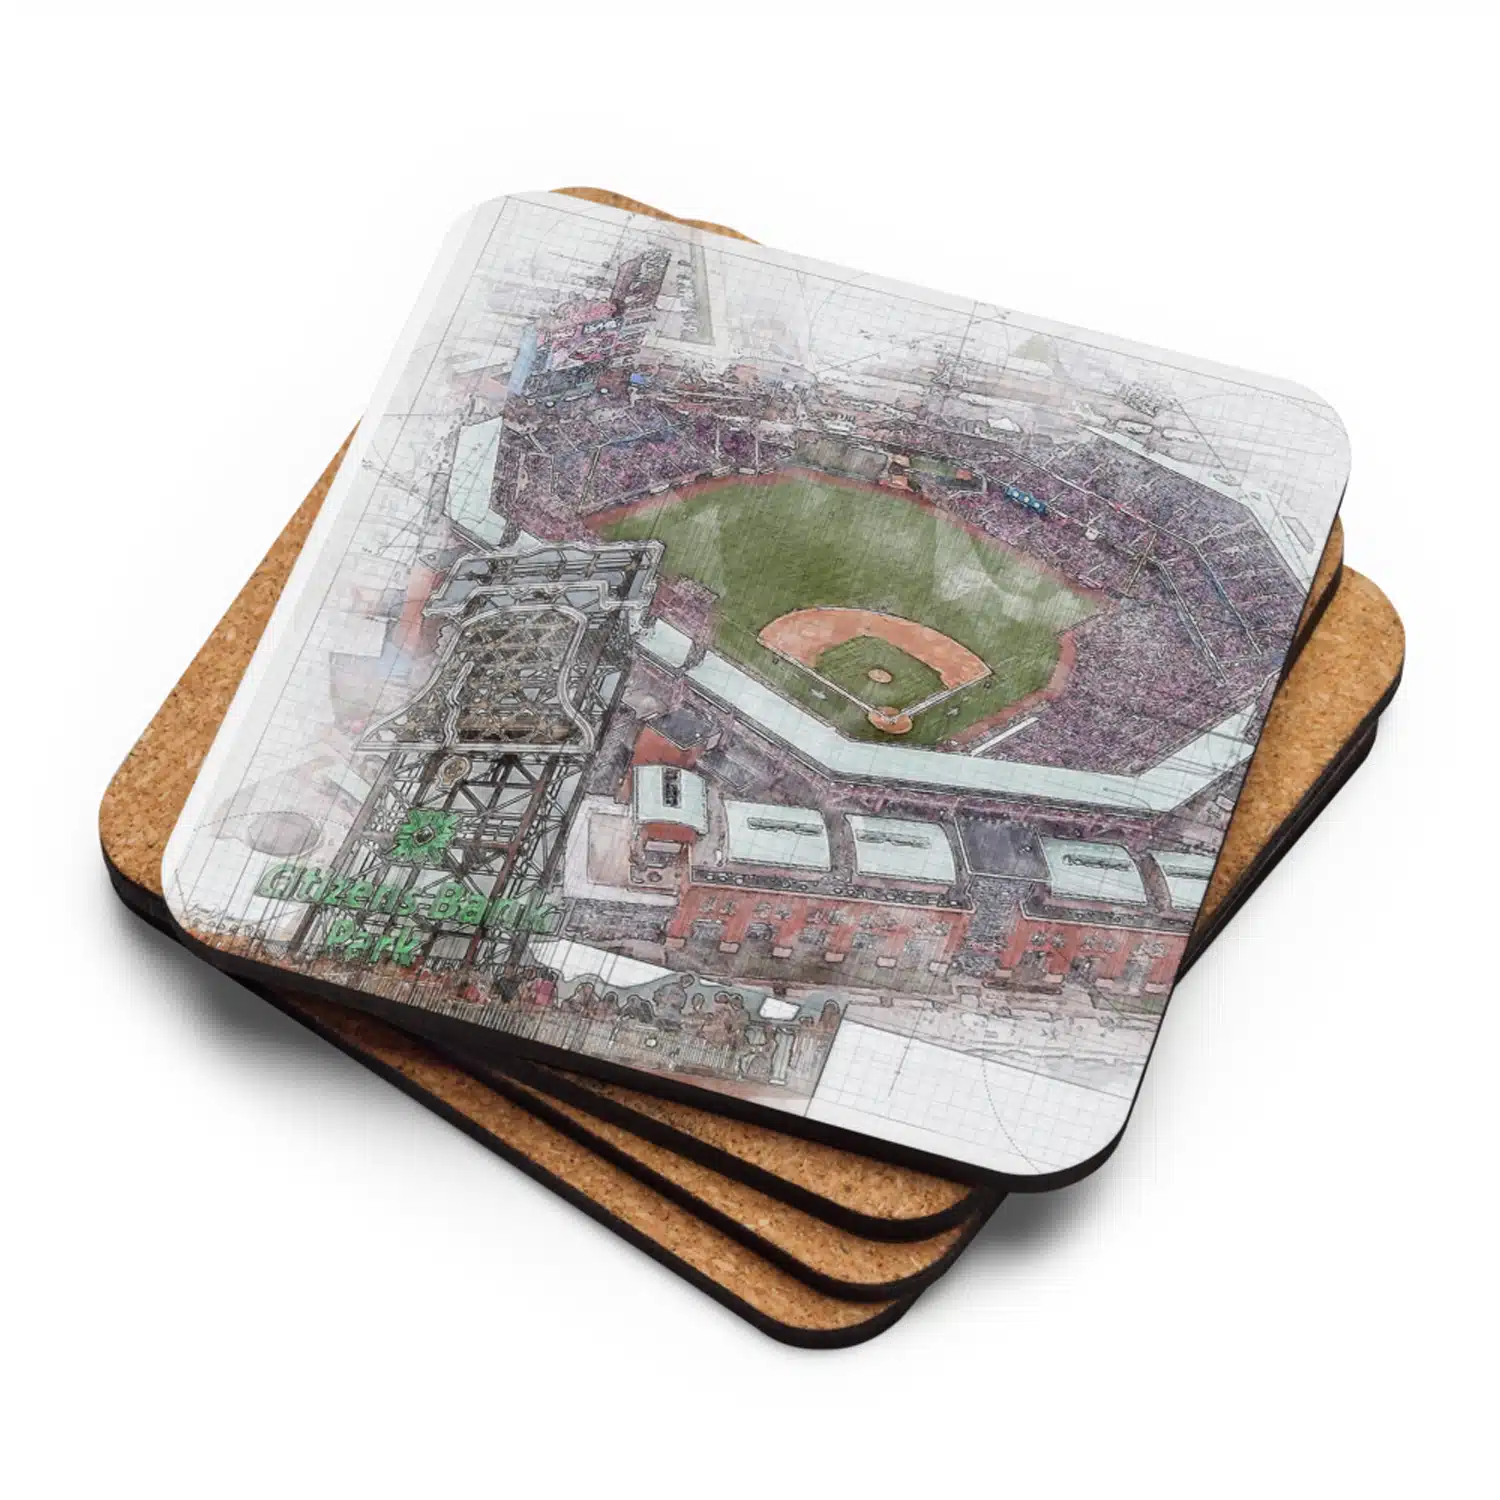 Citizens Bank Park High Gloss Coated, Cork-Backed Drink Coaster, Philadelphia Phillies Baseball